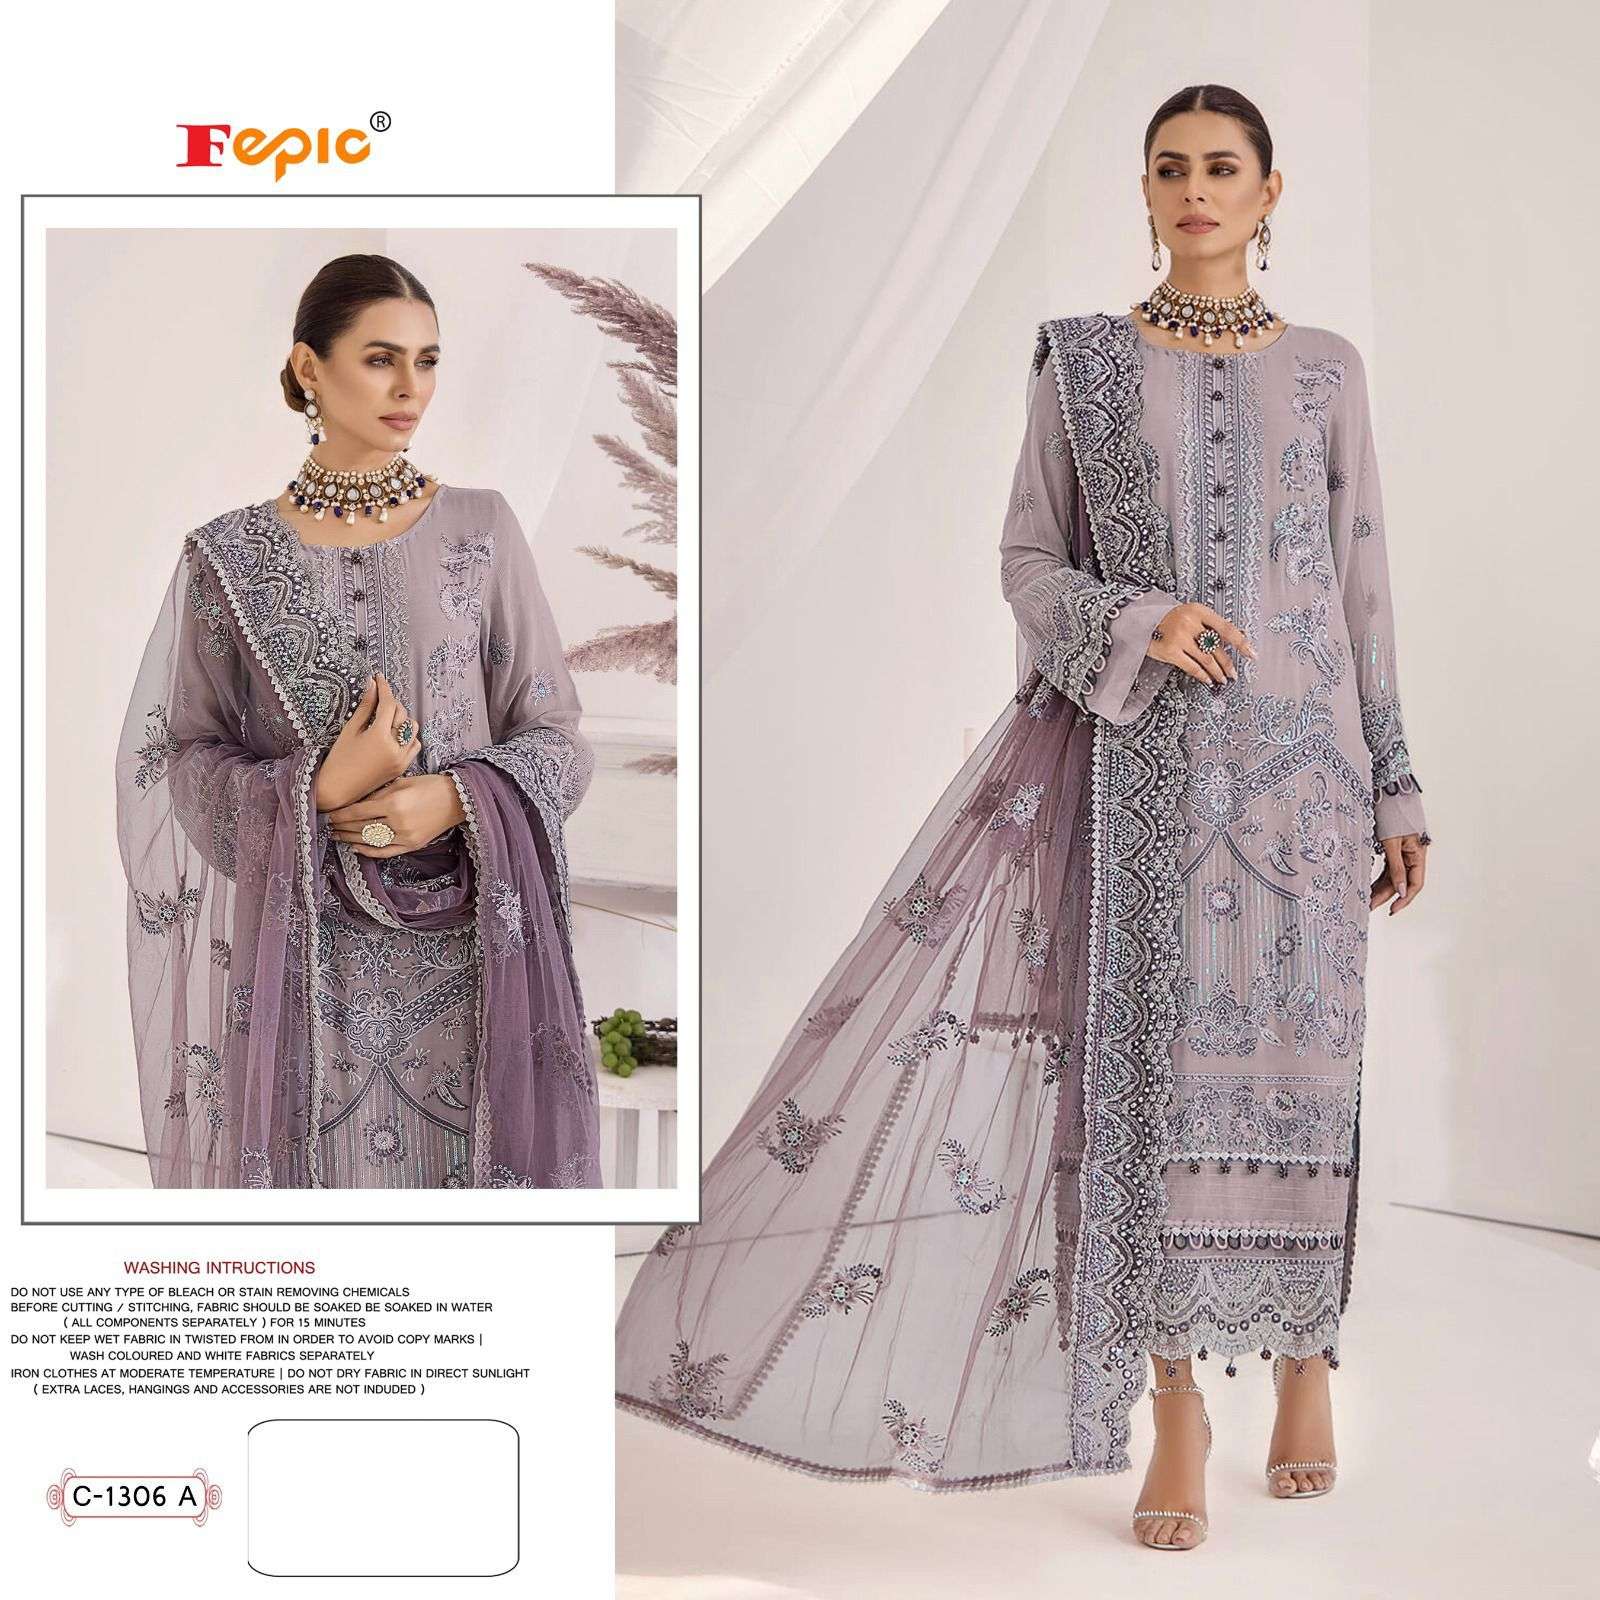 fepic 1306 series georgette designer pakistani salwar suits online market surat 